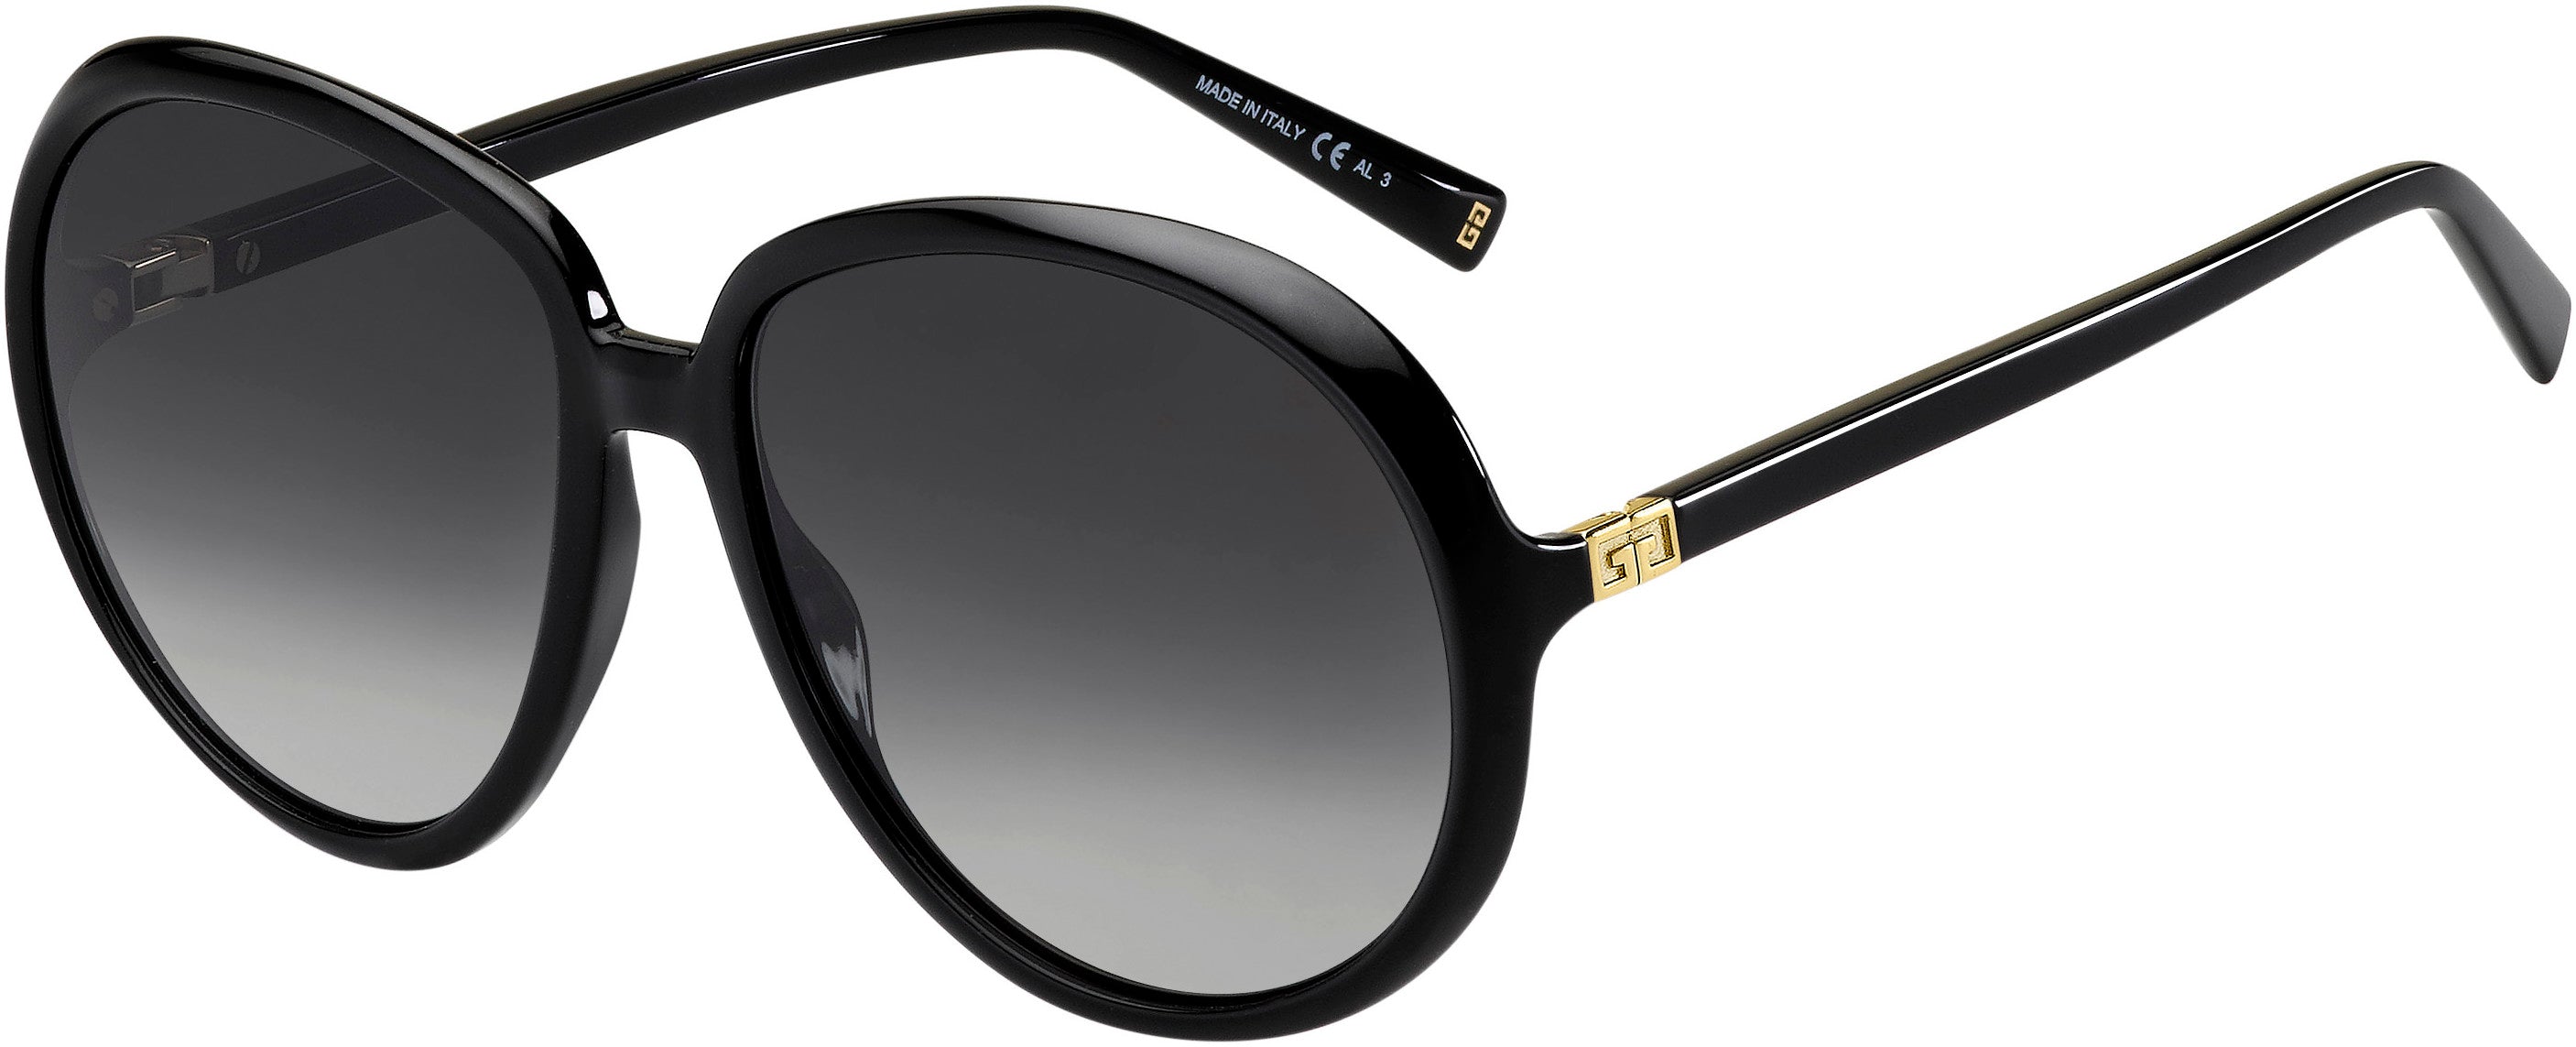  Givenchy 7180/S Oval Modified Sunglasses 0807-0807  Black (9O Dark Gray Gradient)